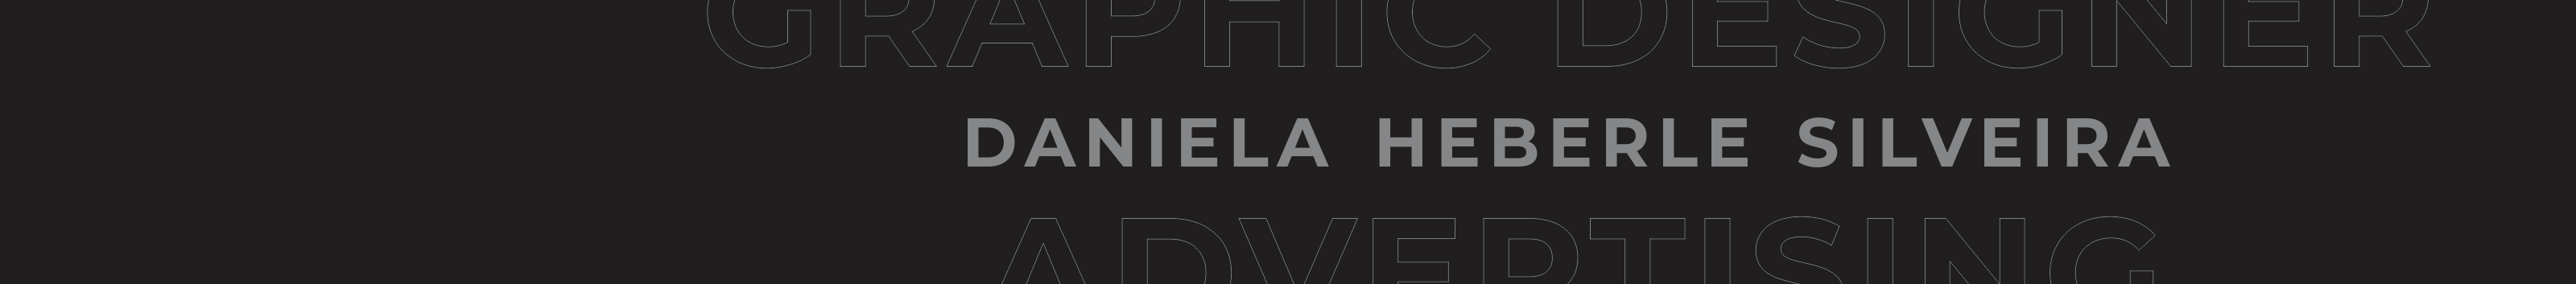 Daniela Heberle Silveira's profile banner